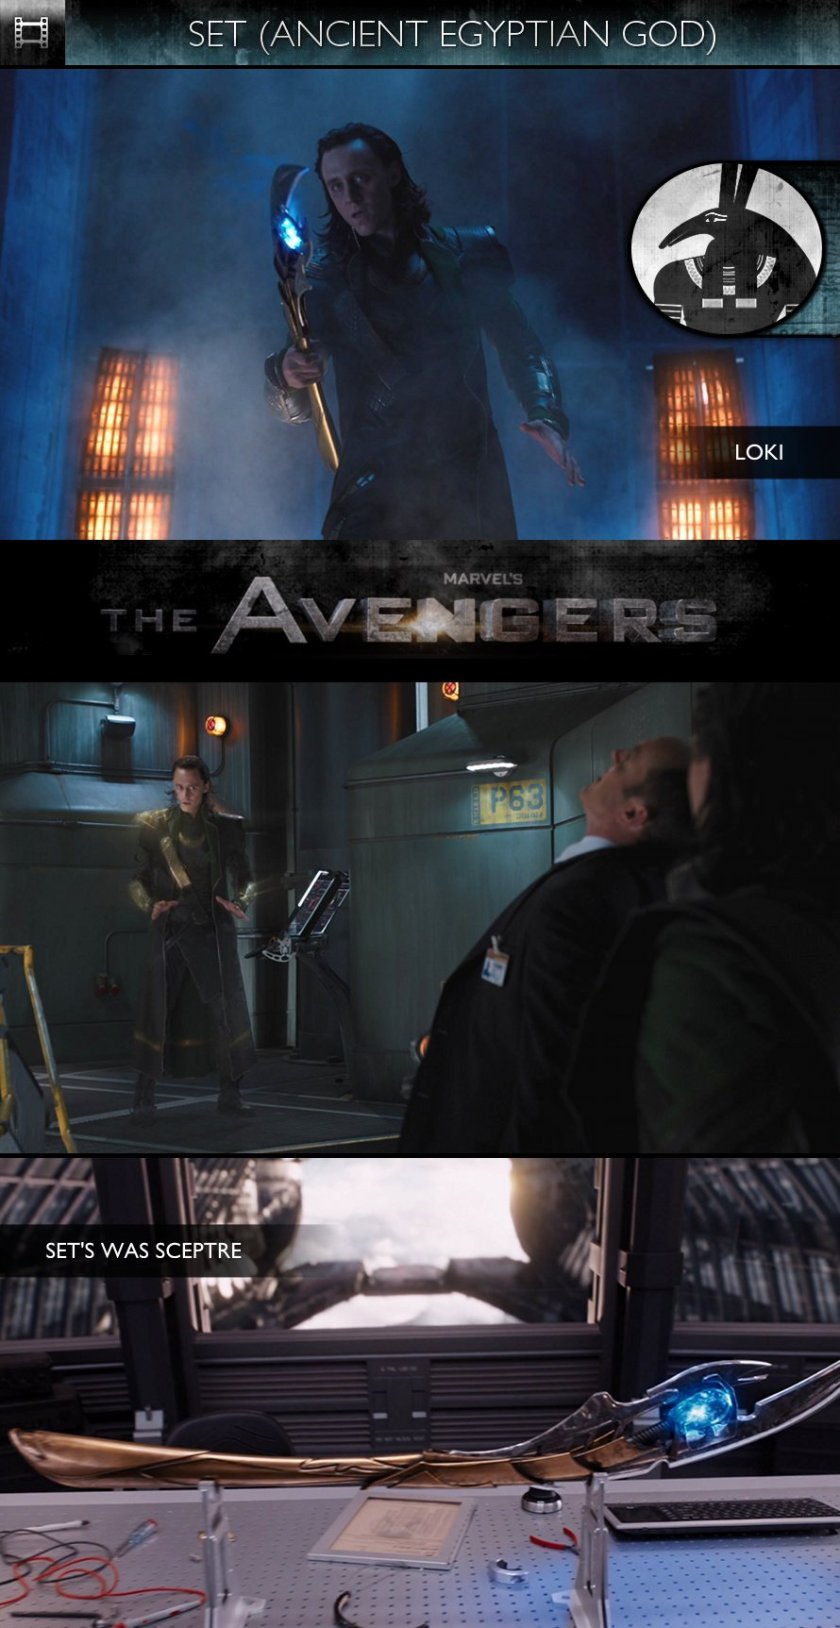 SET - The Avengers (2012) - Loki & Was Sceptre